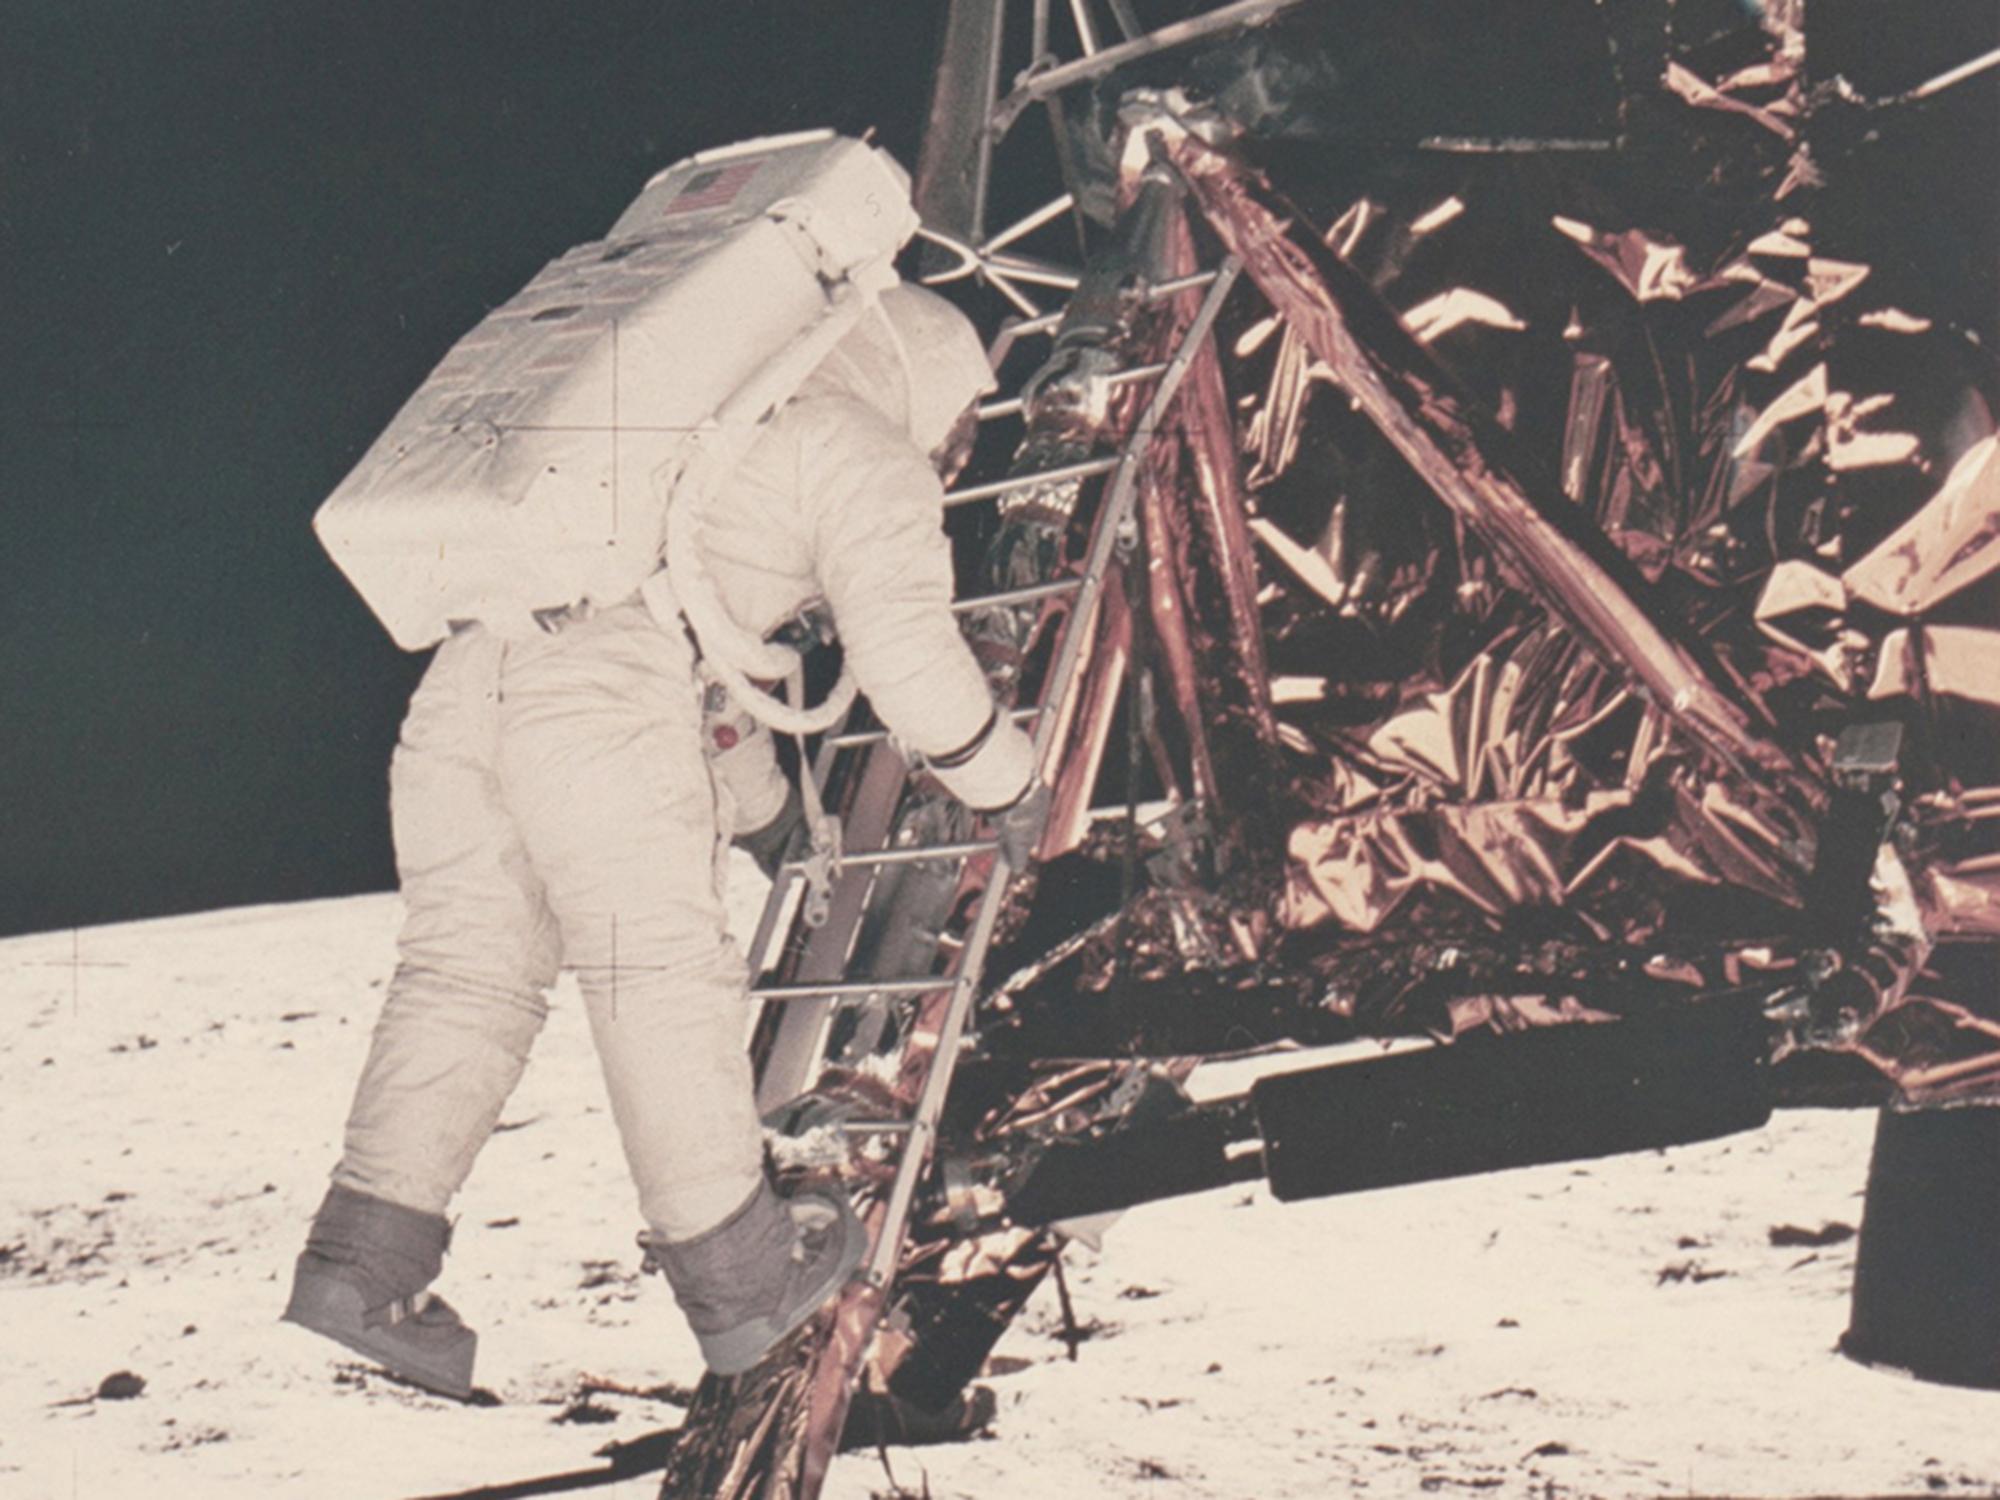 original moon landing photos value